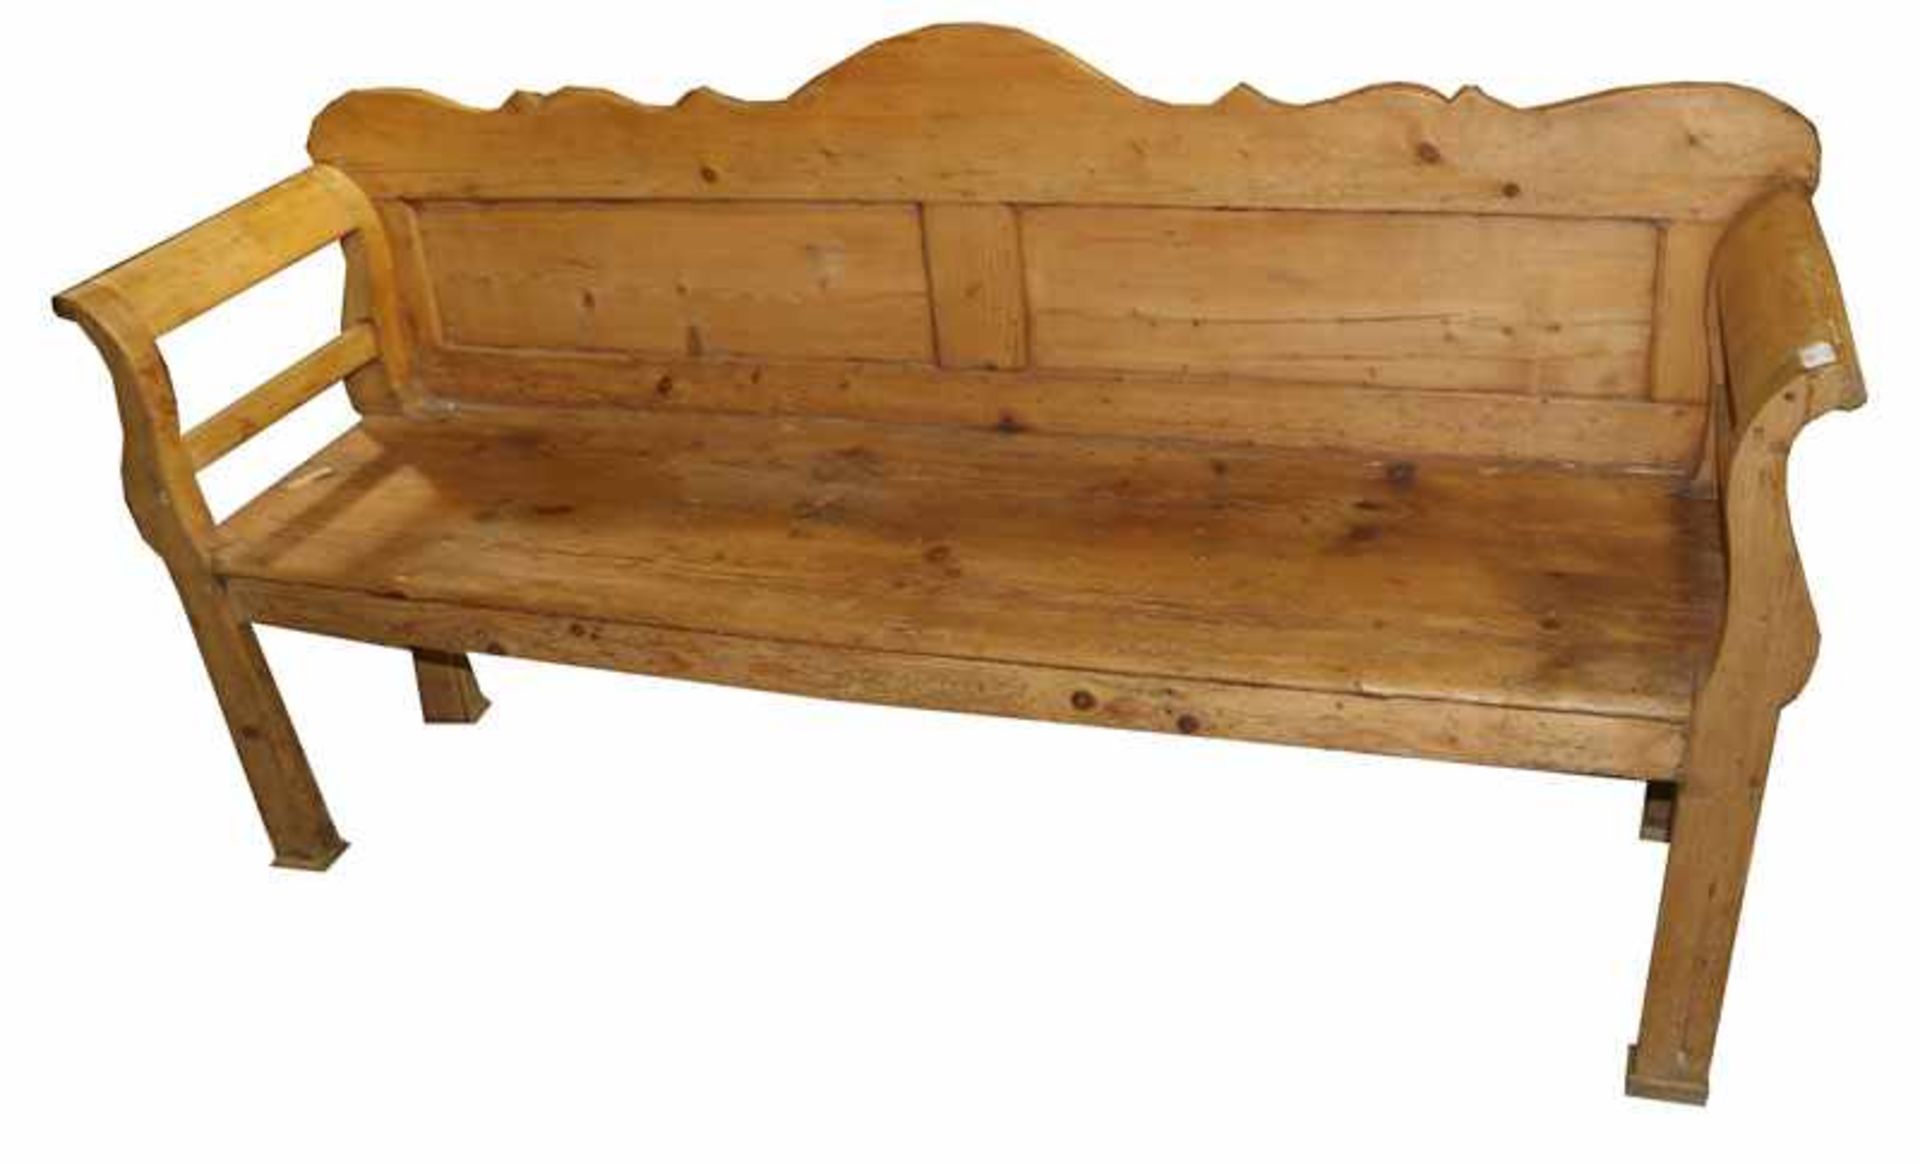 Holzbank, Nadelholz, 19. Jahrhundert, H 100 cm, B 195 cm, T 49 cm, Gebrauchsspuren